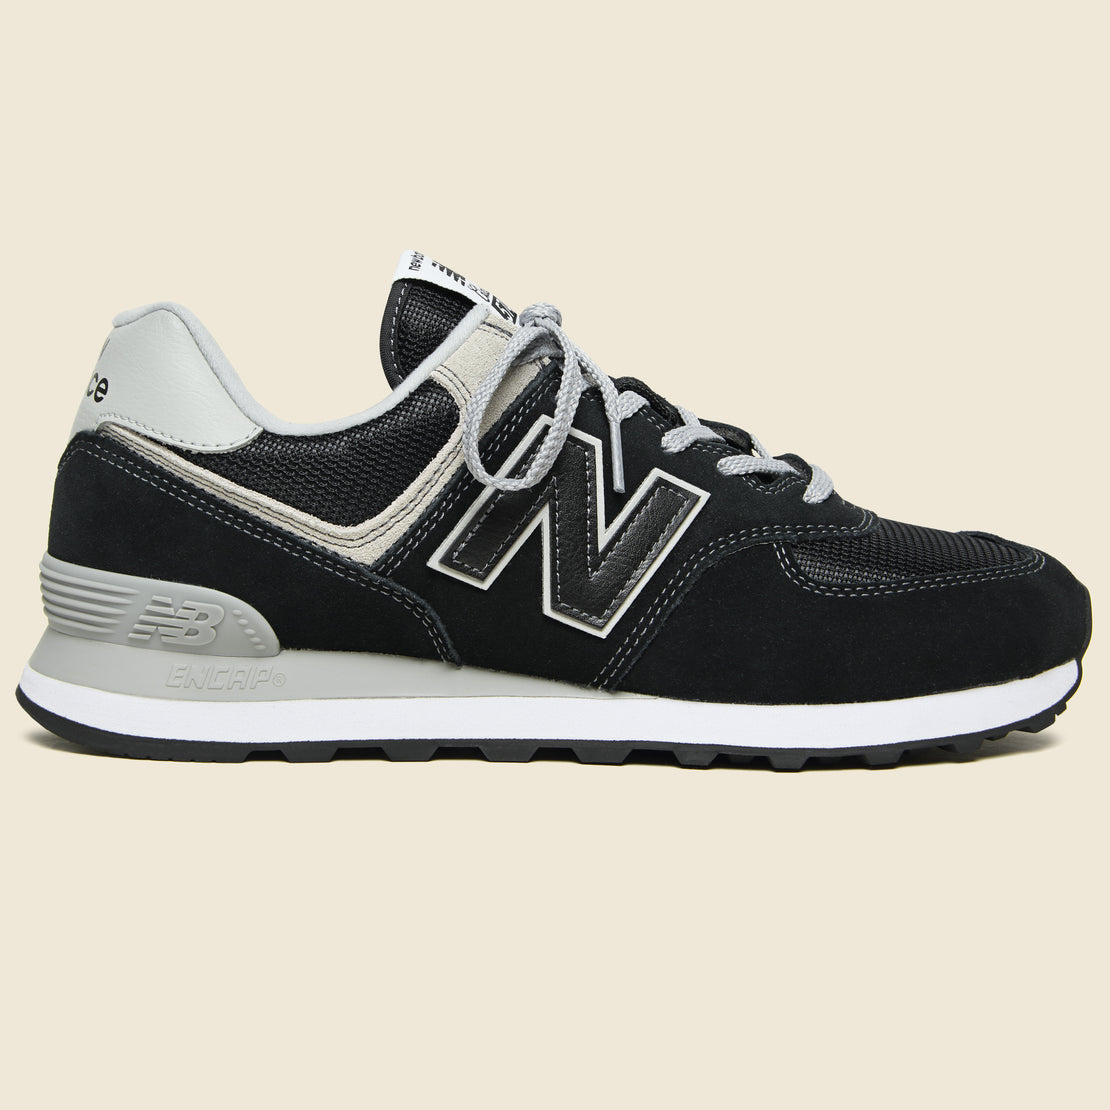 New Balance 574 Sneaker - Black